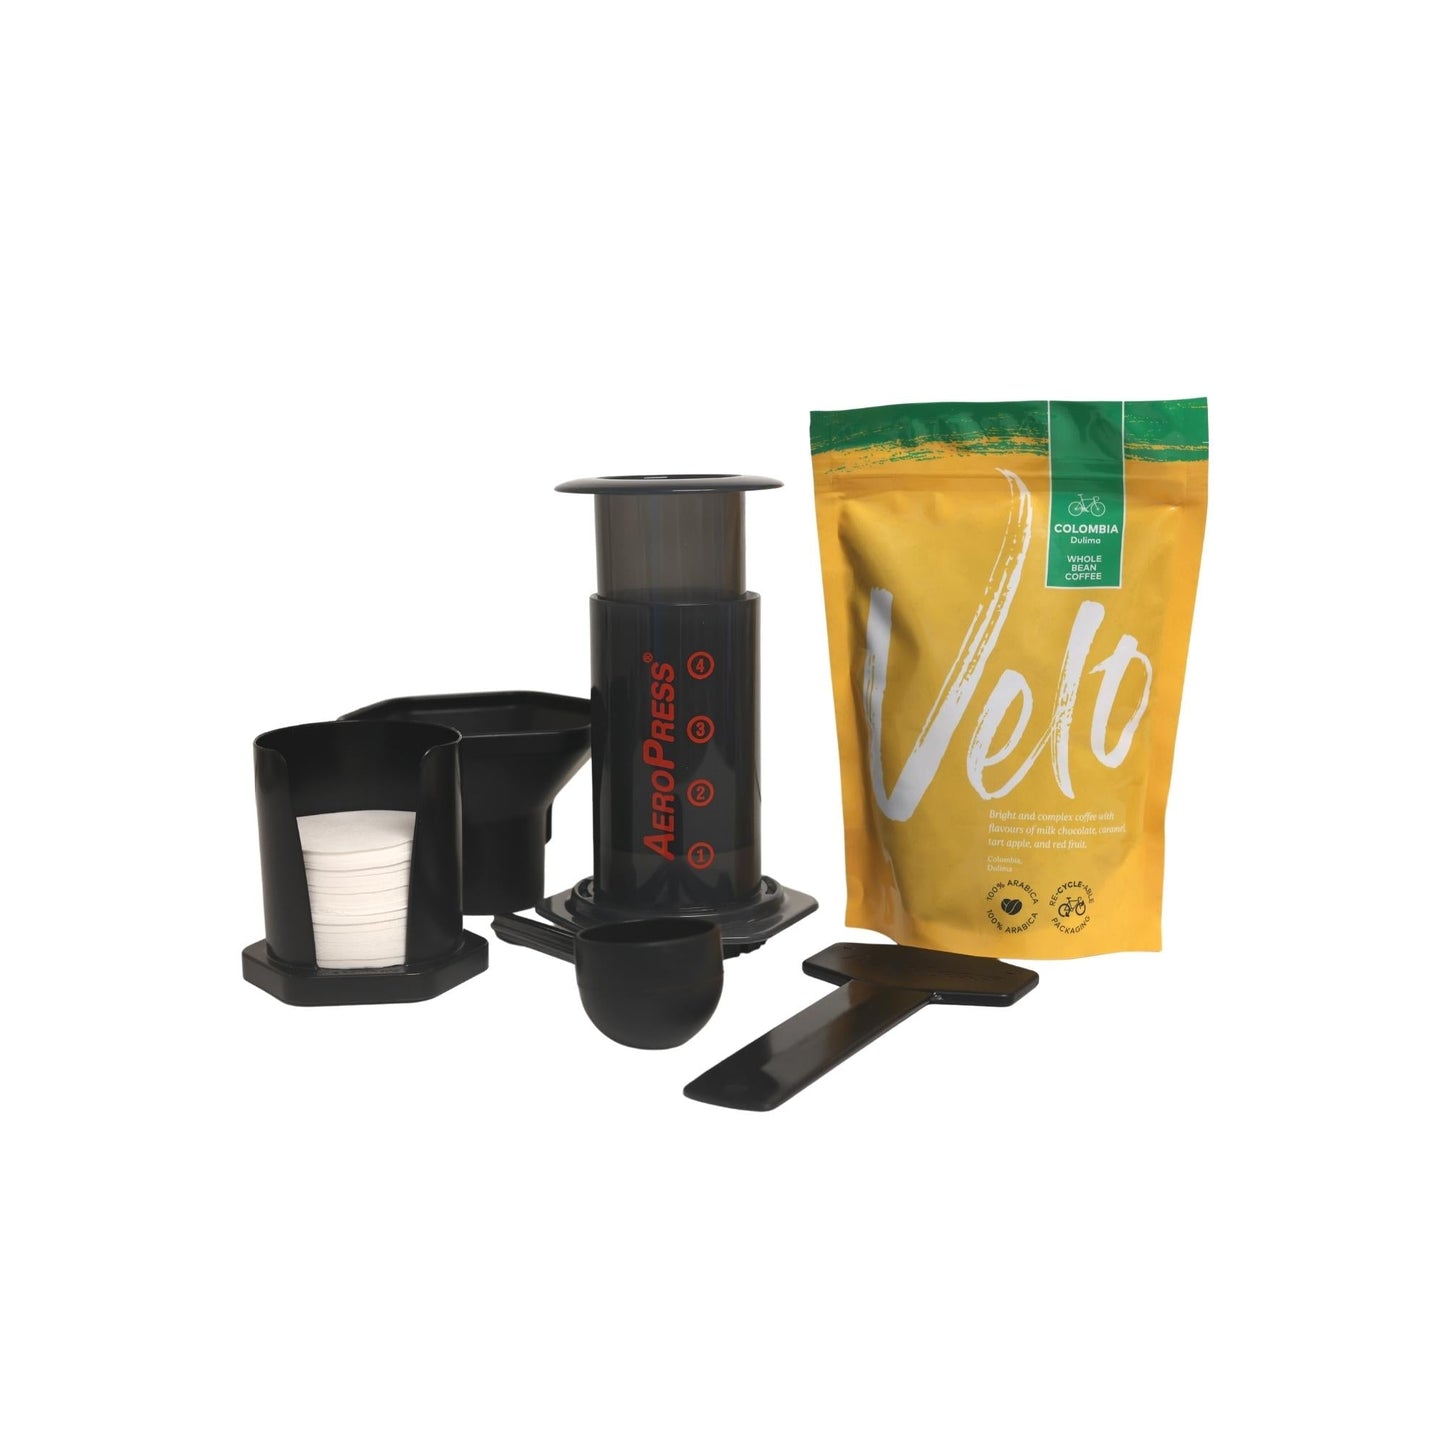 Velo Colombia Dulima Coffee and AeroPress Bundle - Velo Coffee Roasters